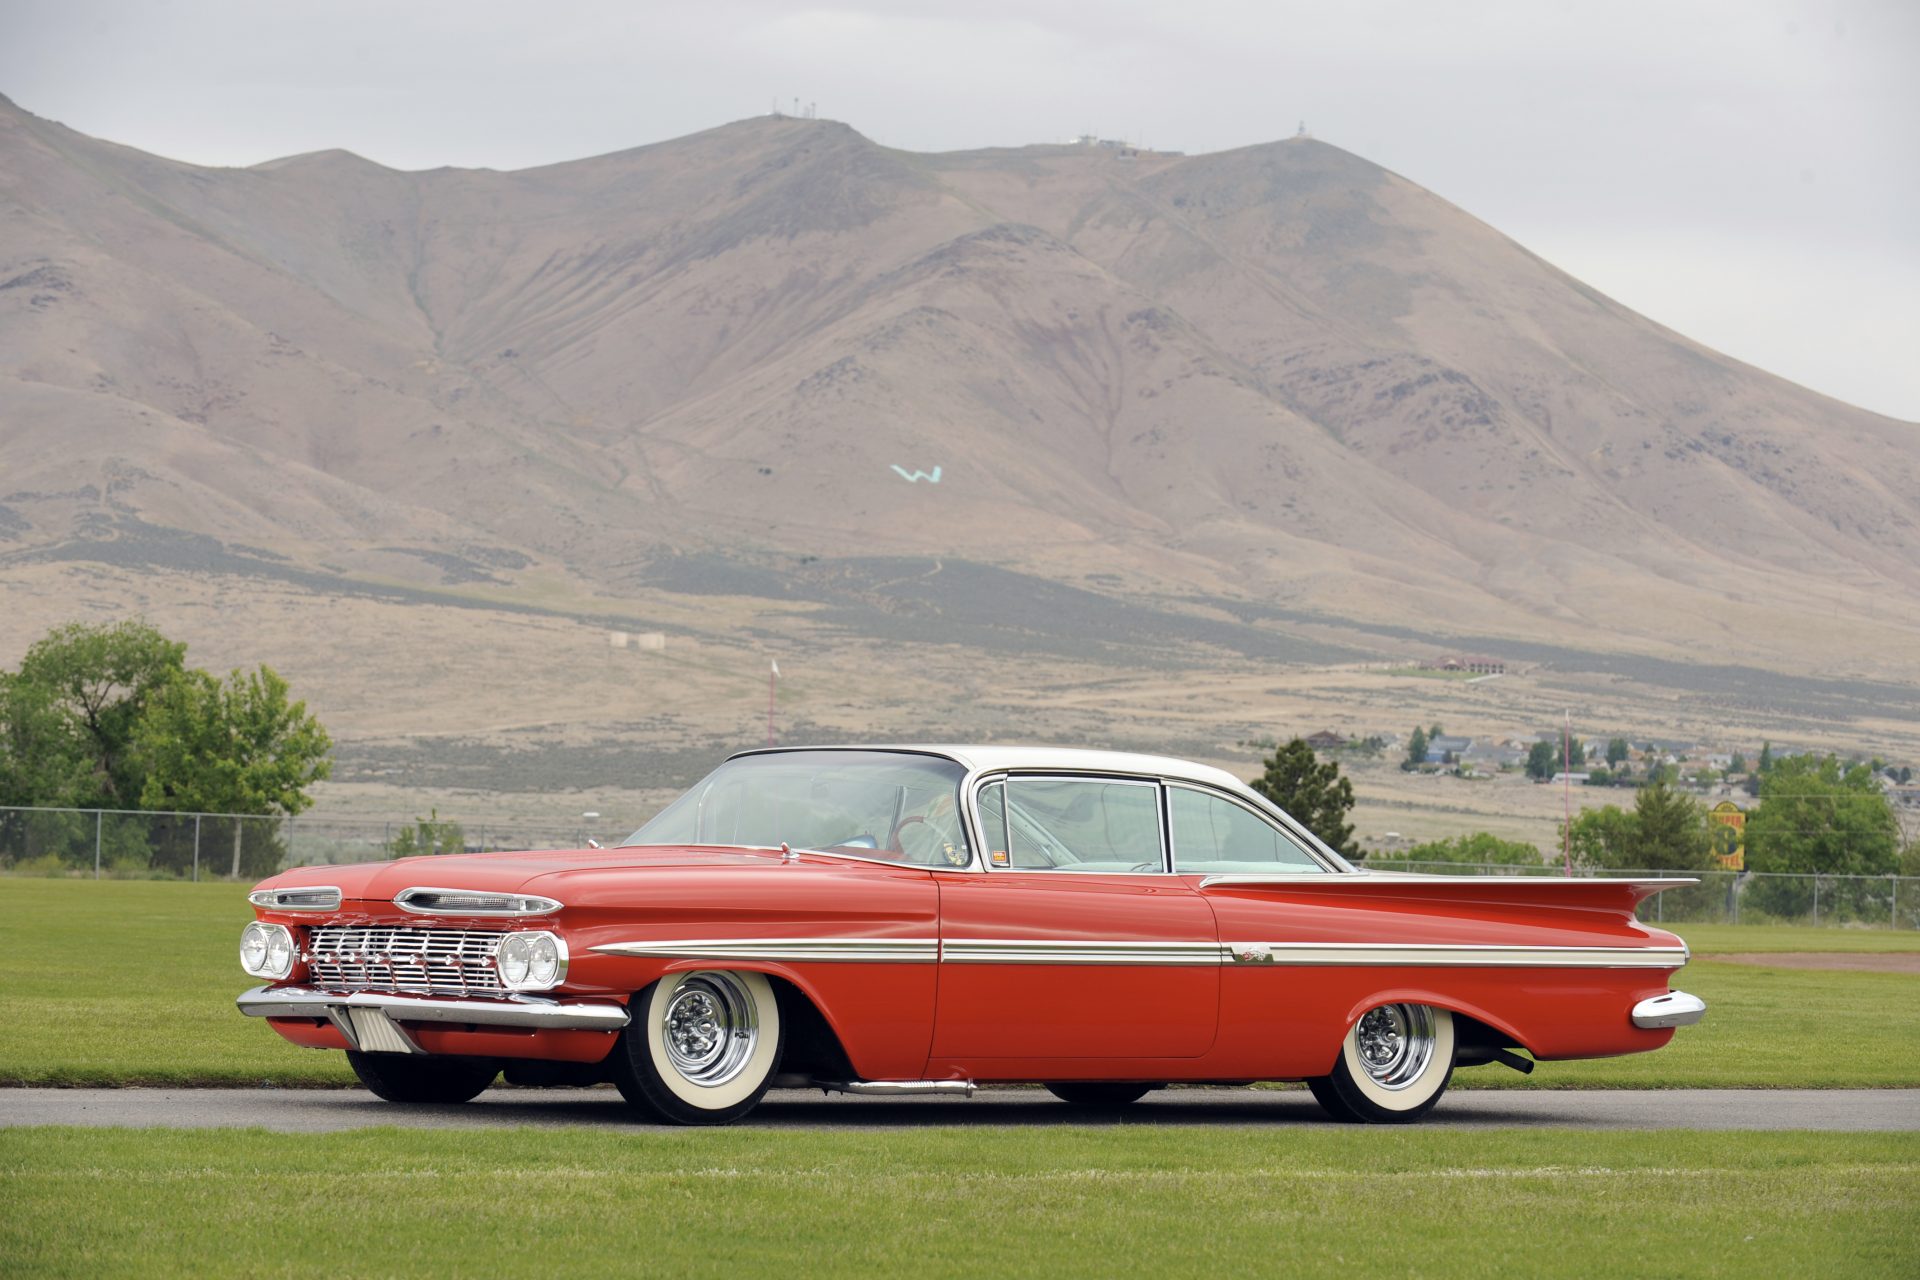 #10: Chevrolet Impala (1959), 14 million cars